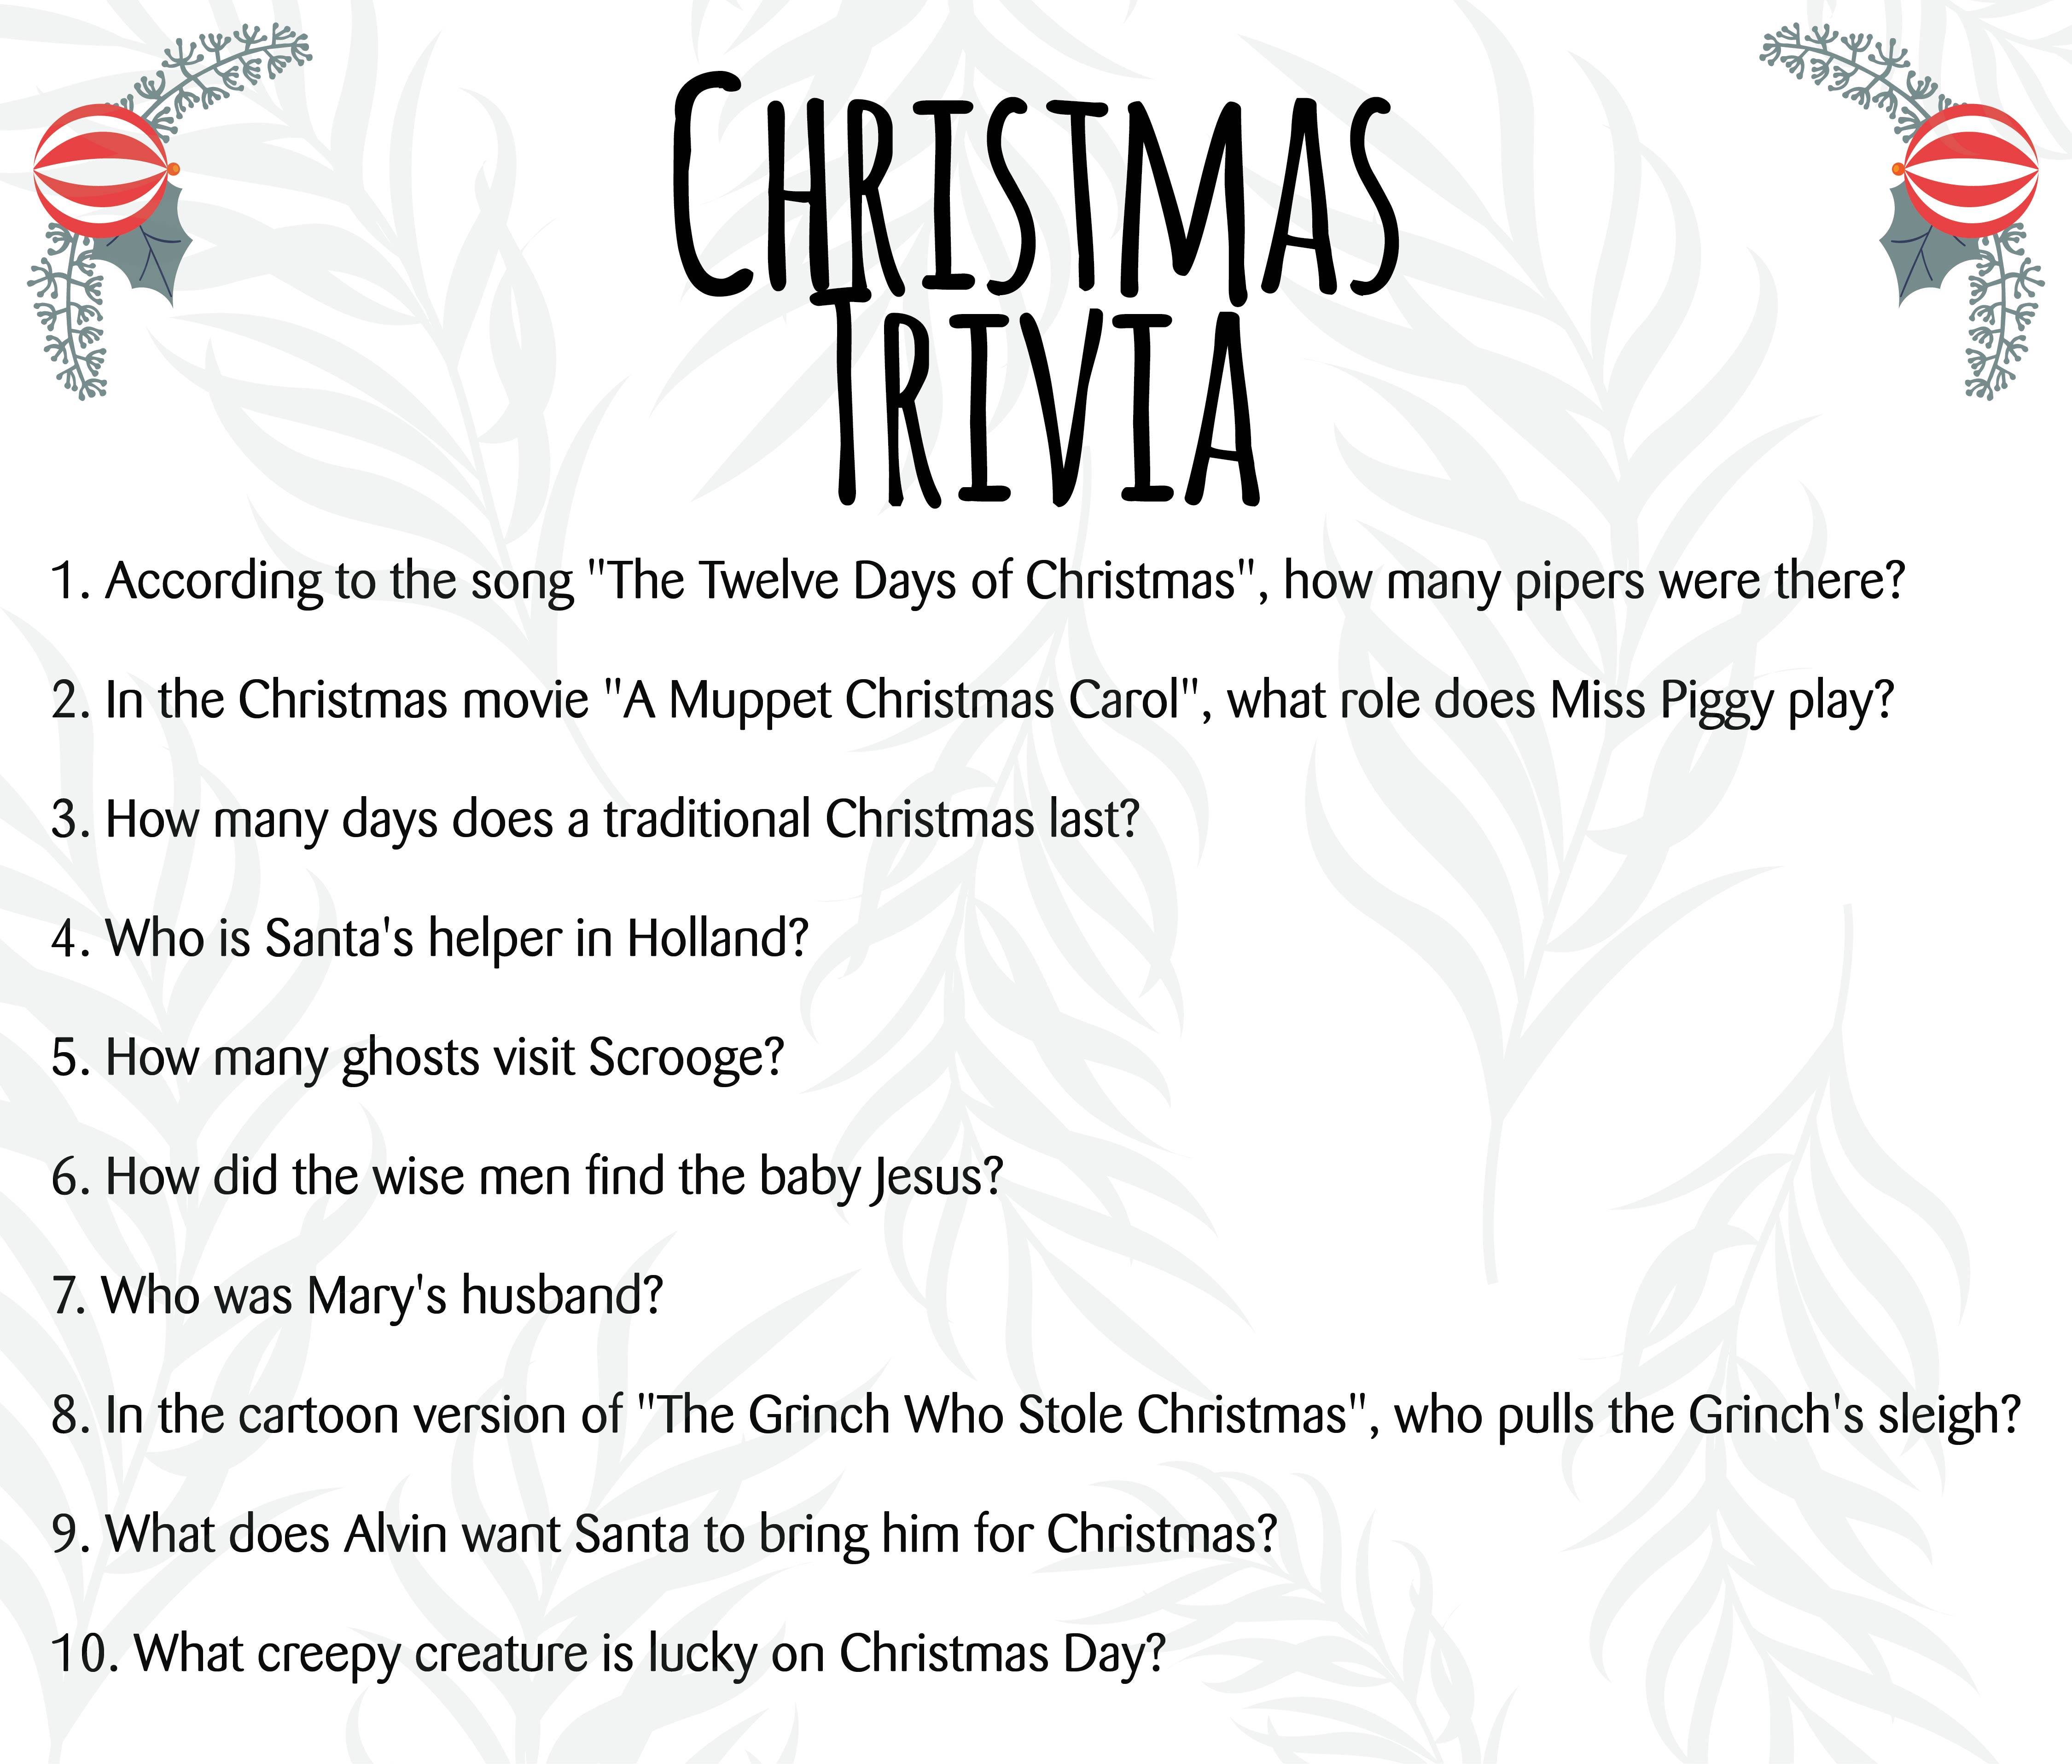 Christmas Trivia Games